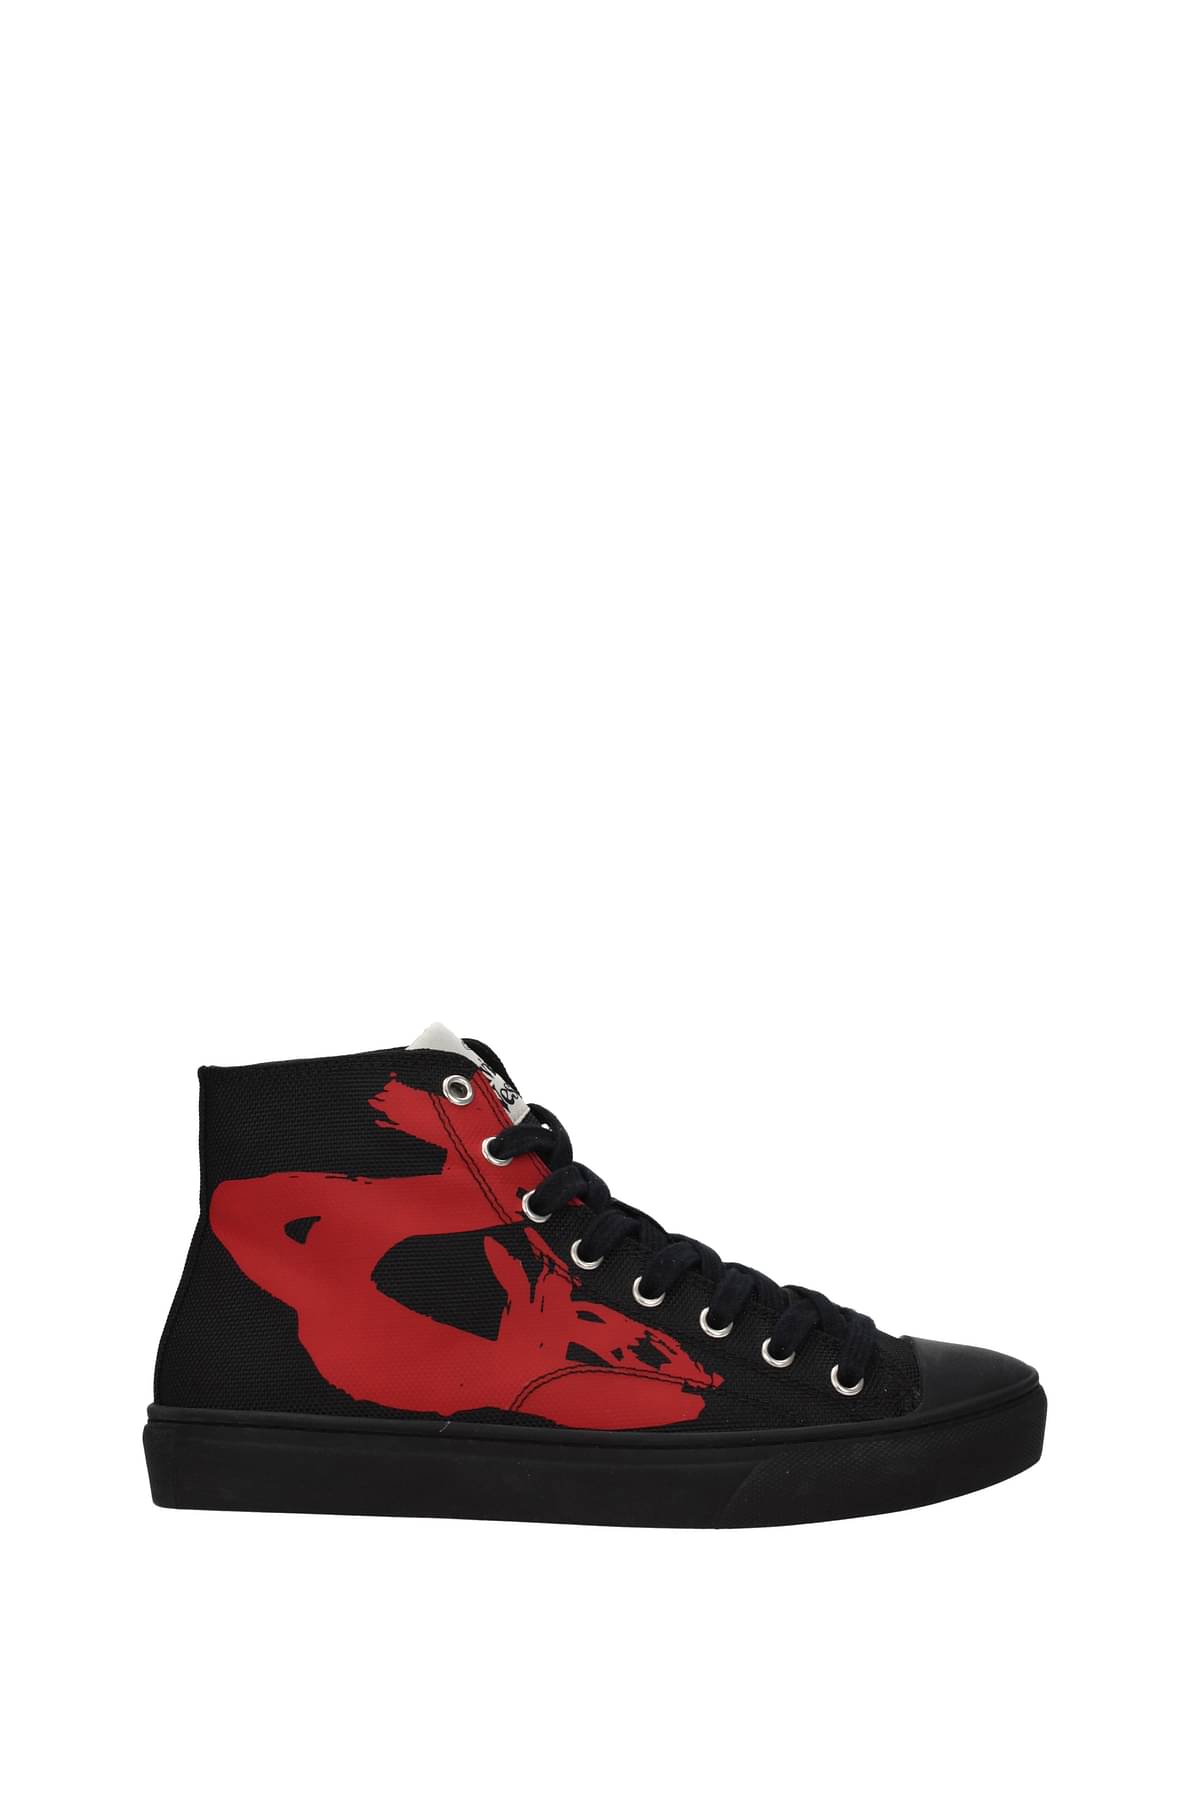 Vivienne Westwood Sneakers Men 75010001MW00DFO101 Fabric Black Red 147€